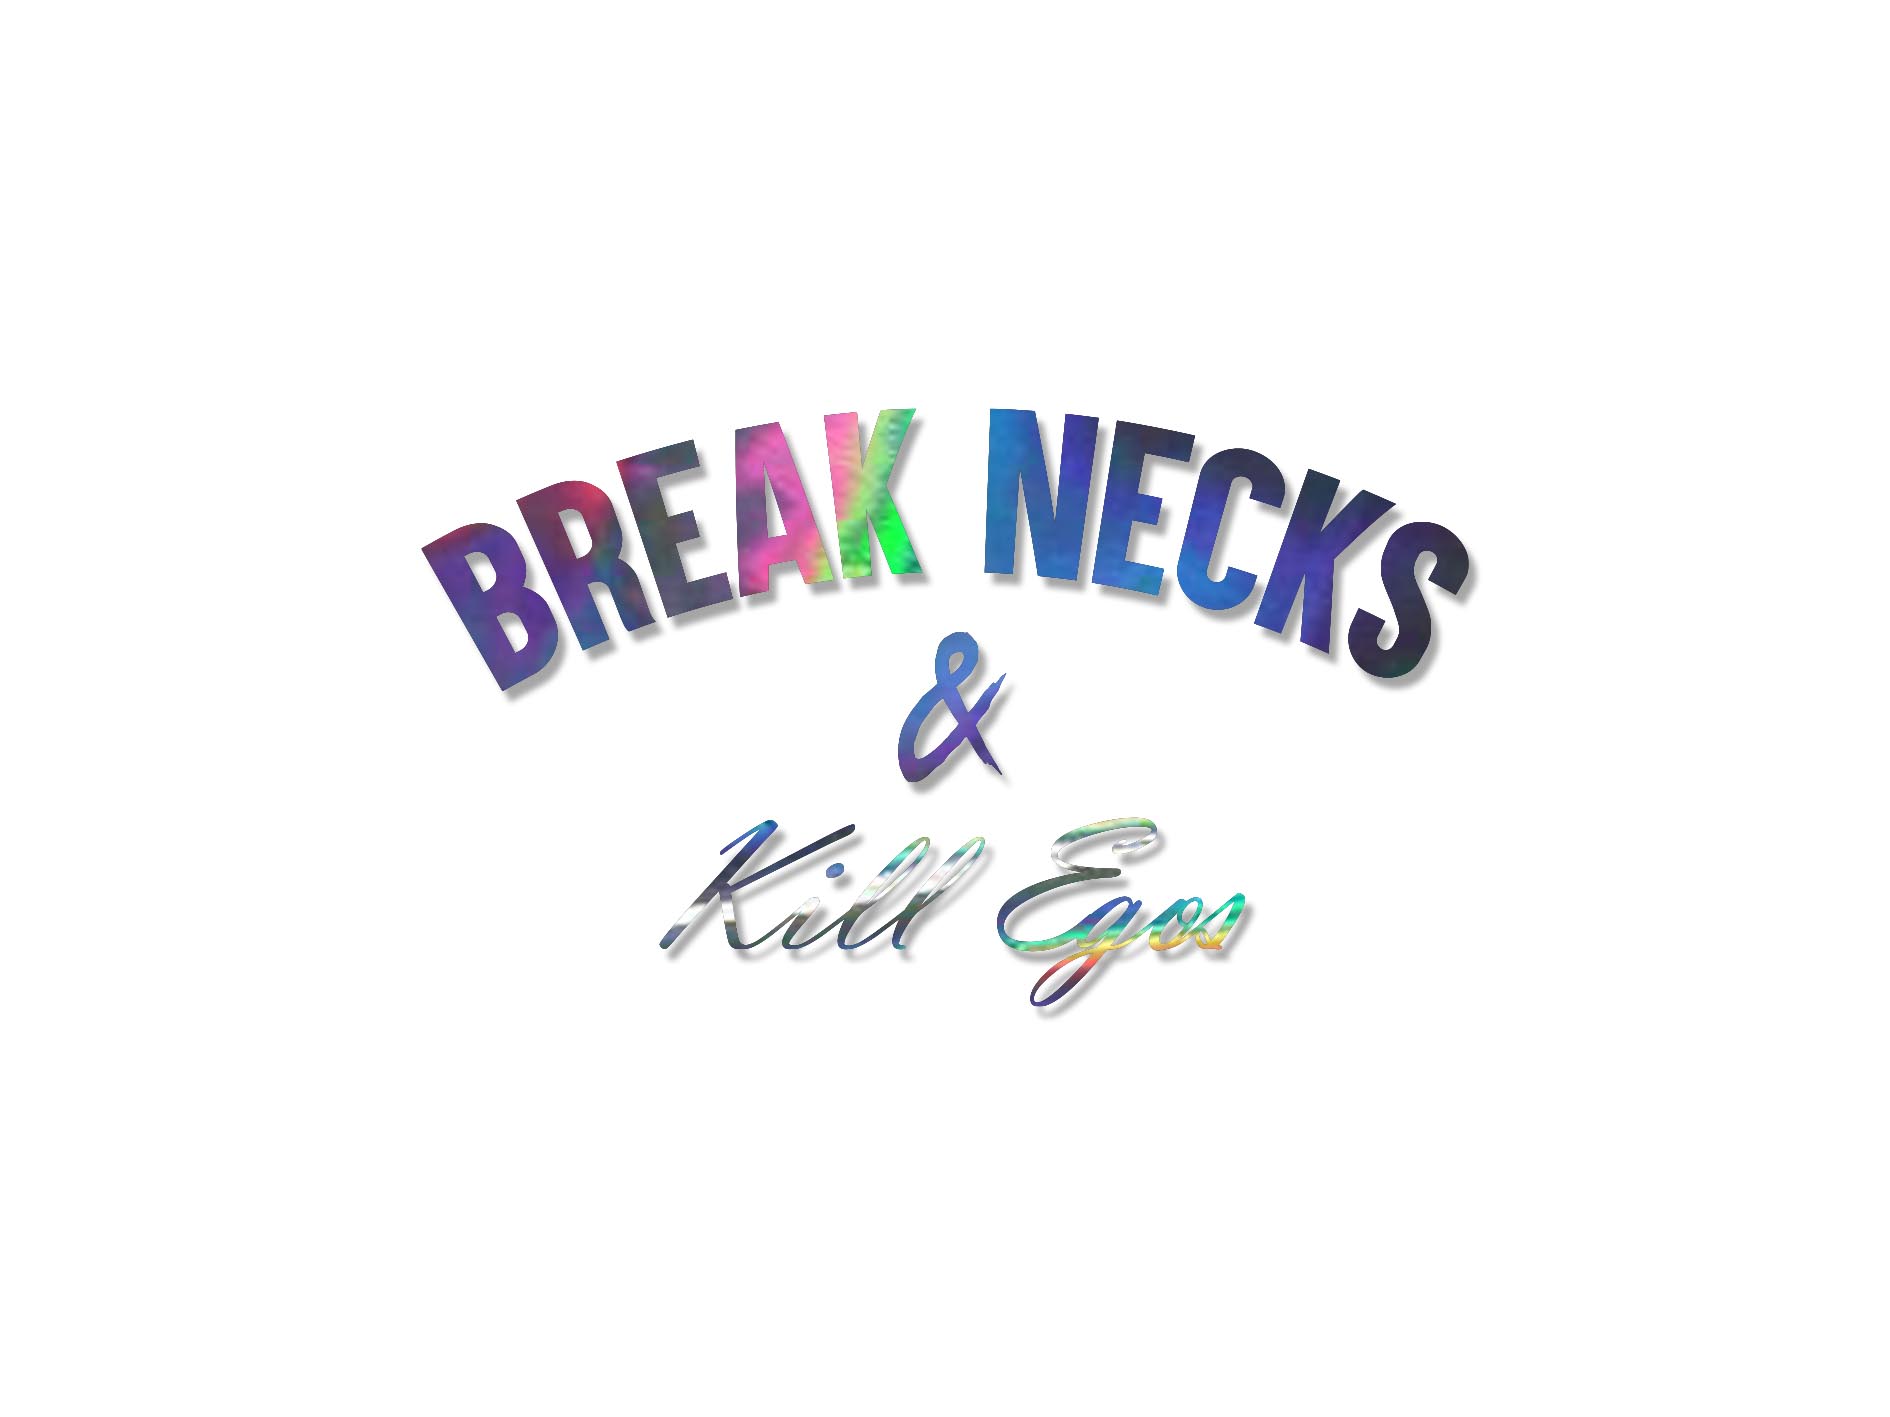 Dekal "Break Necks & Kill Egos"